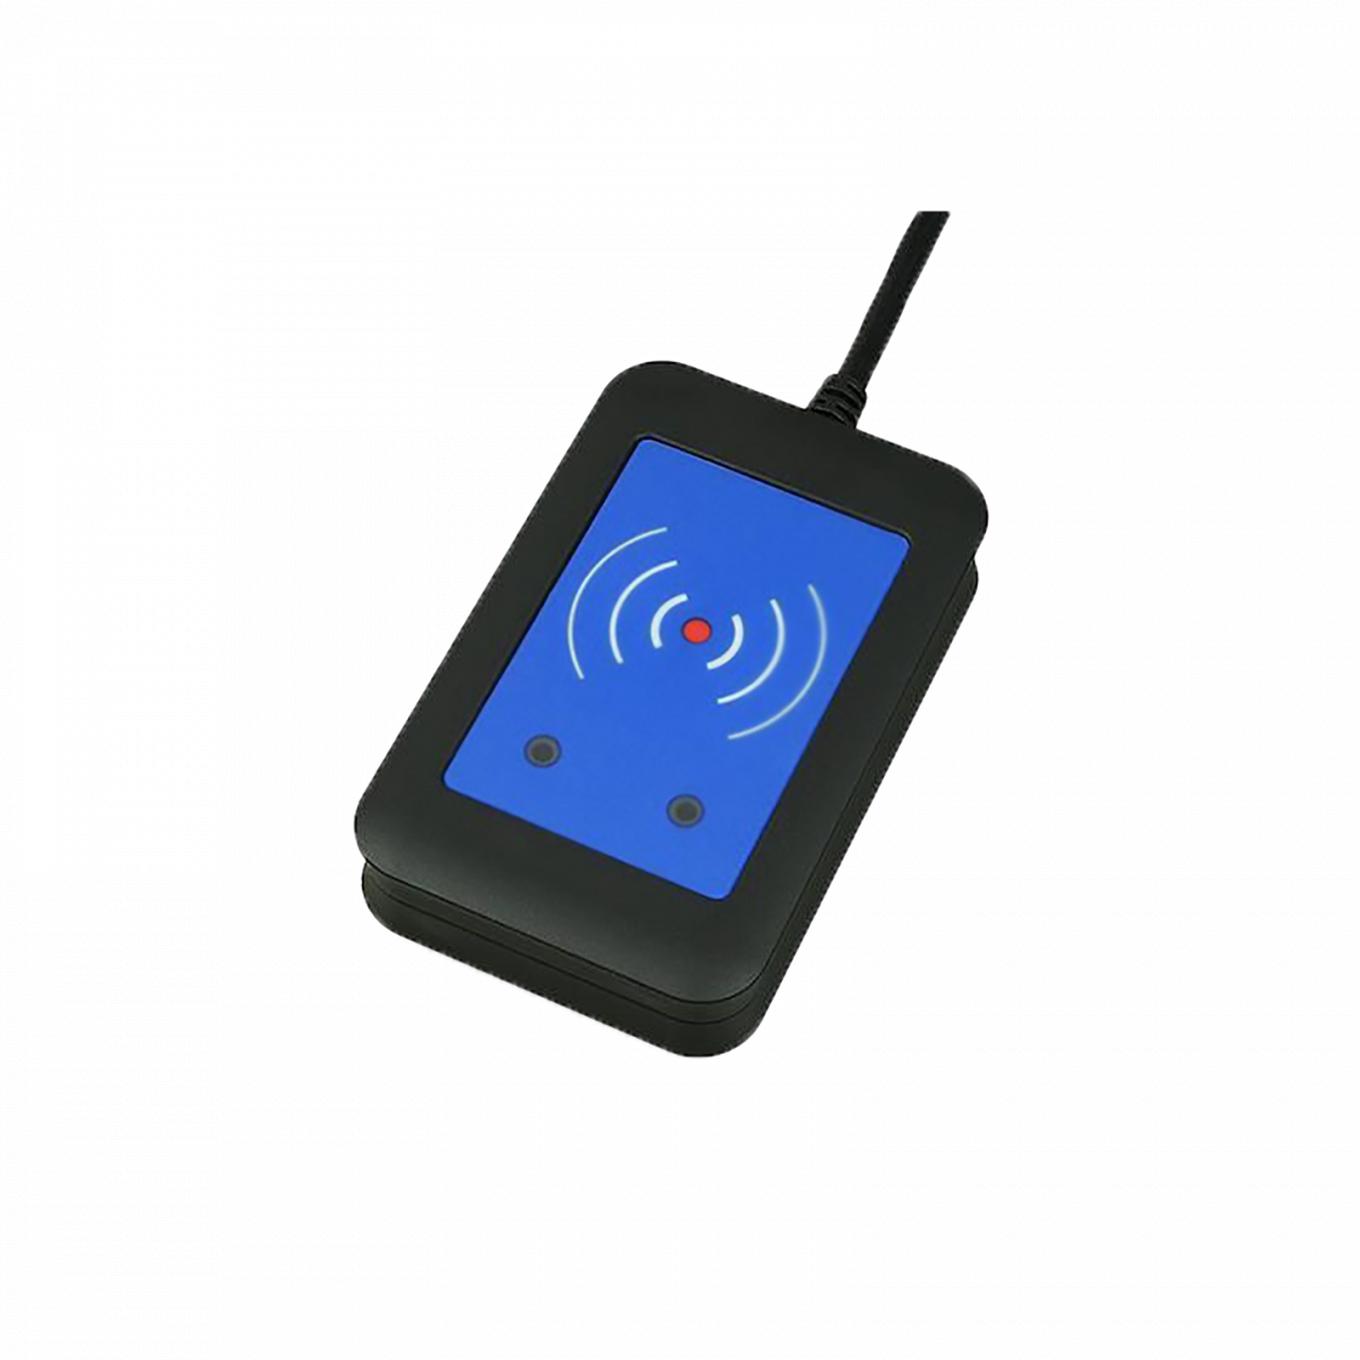 External RFID Card Reader 125kHz + 13.56MHz with NFC (USB) 外部RFIDカードリーダー125kHz + 13.56MHz、NFC (USB) 付き、左から見た図